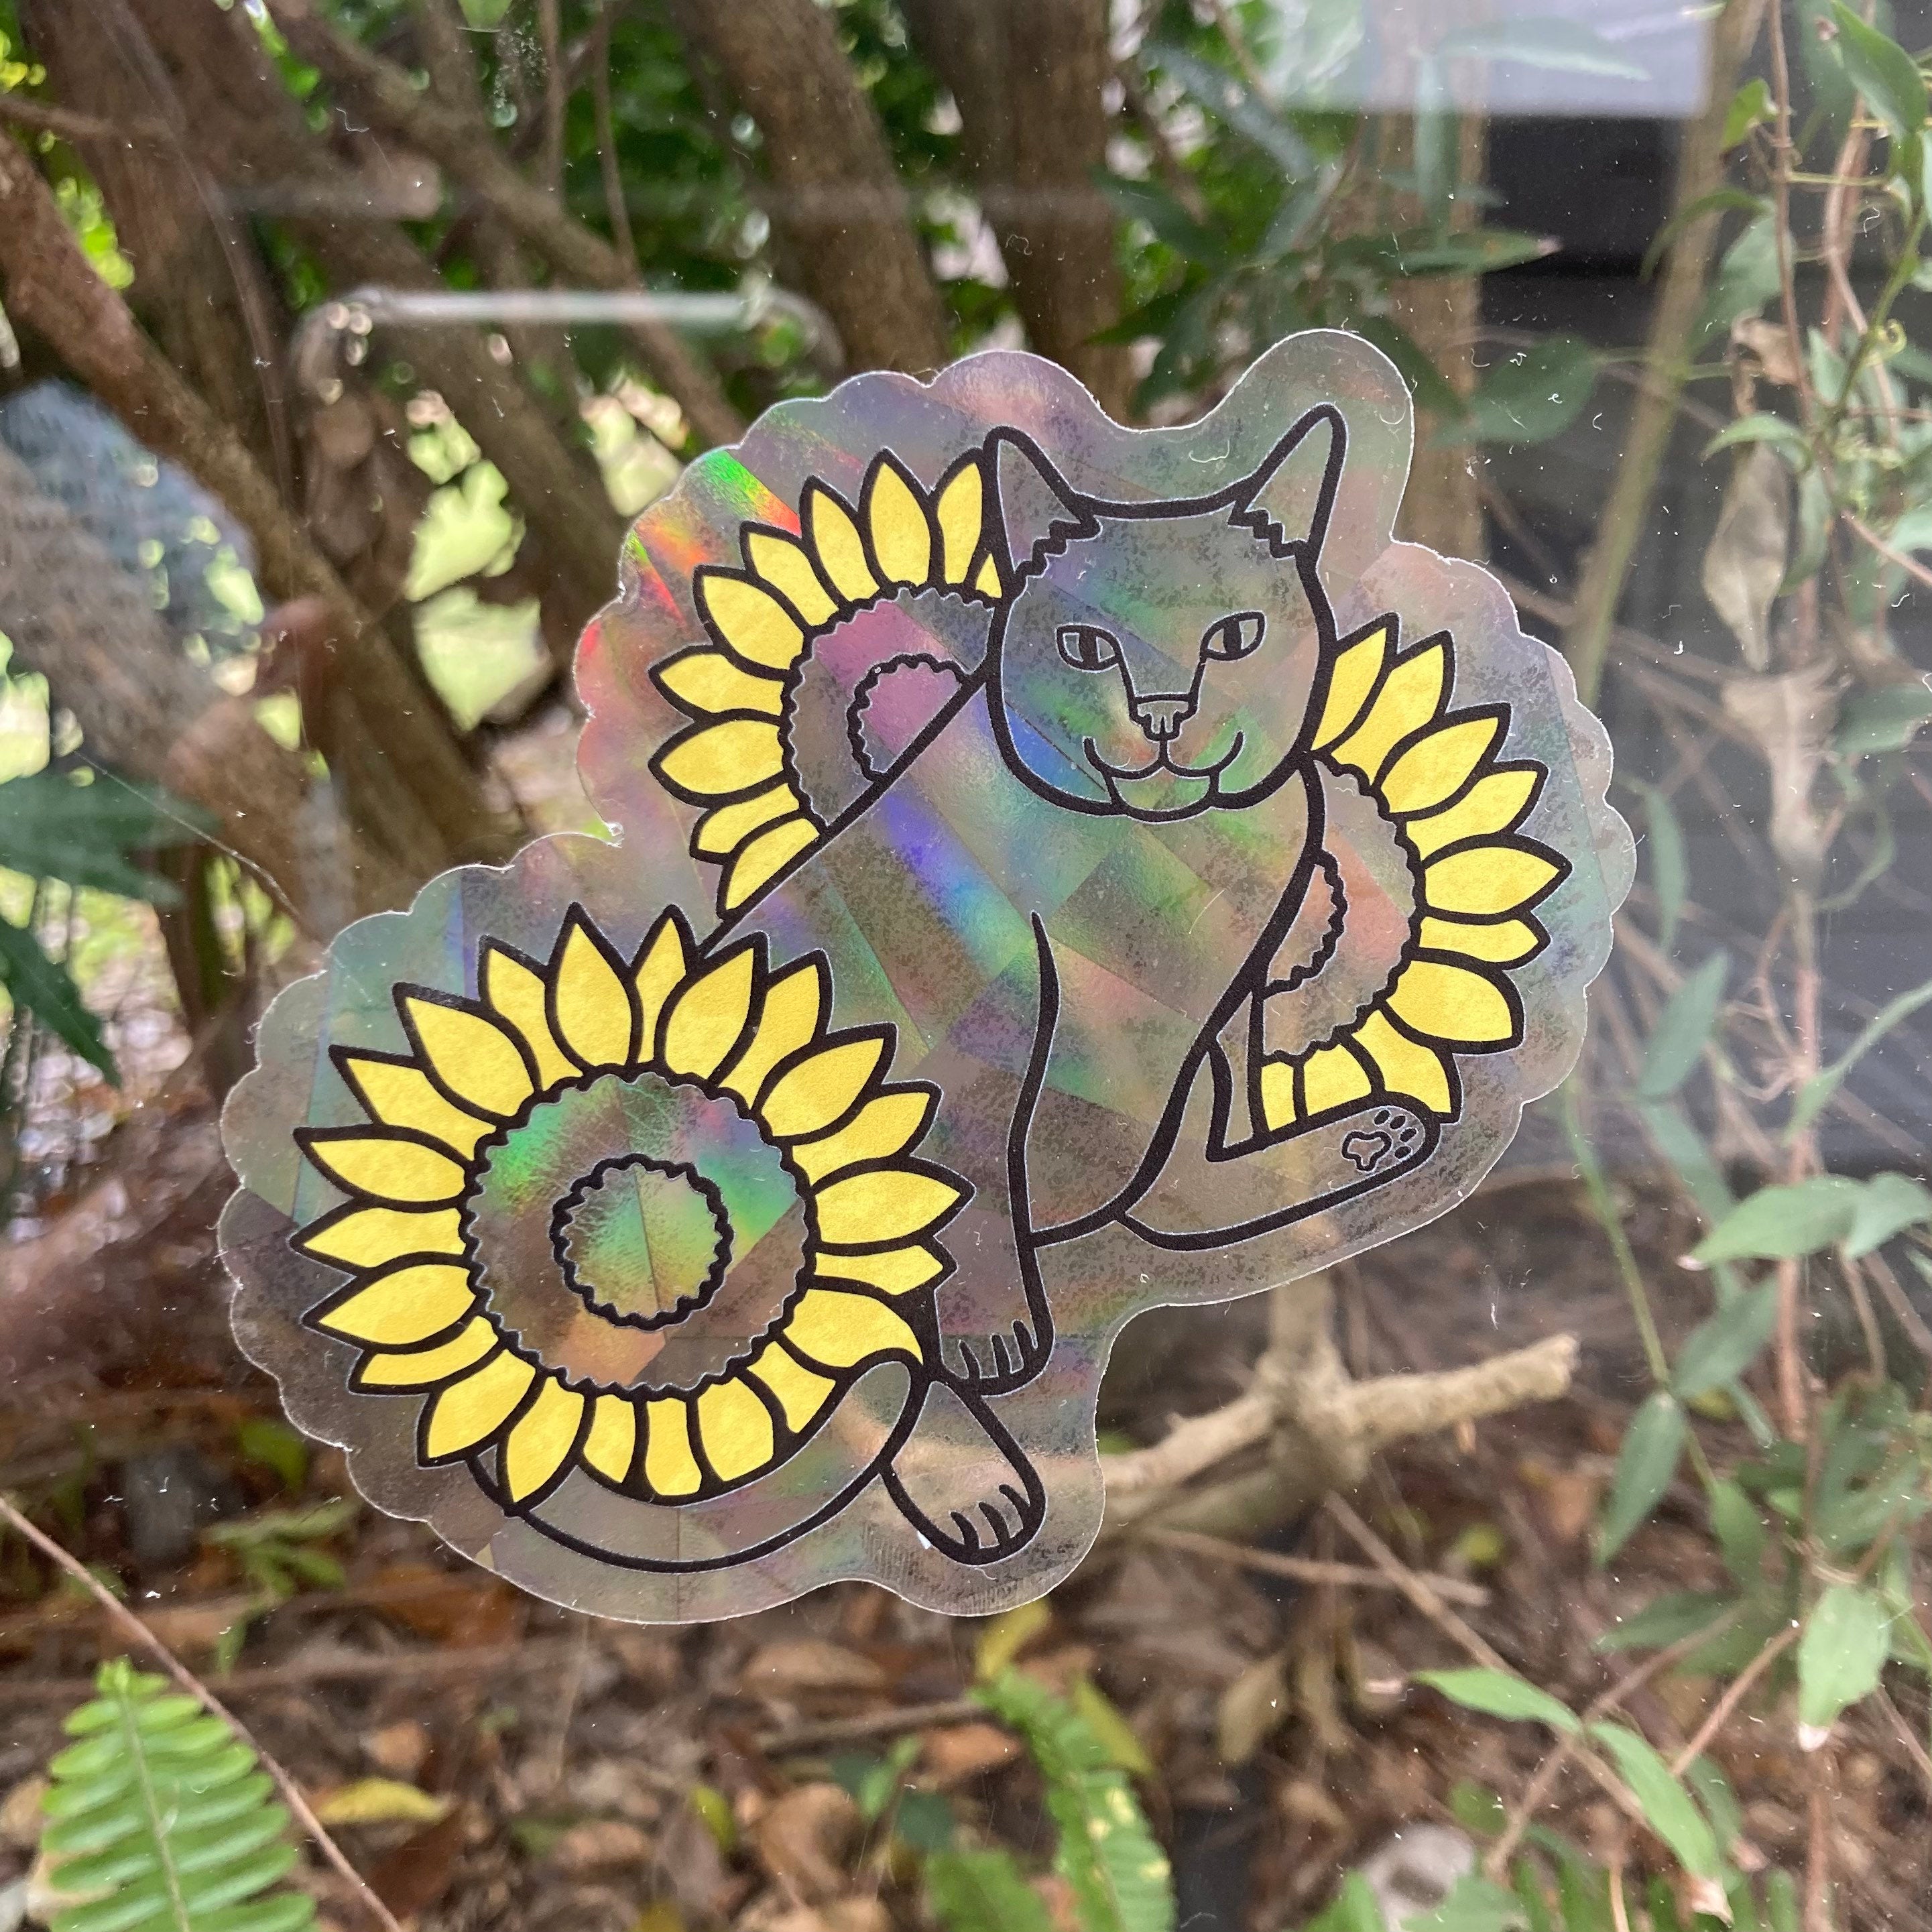 Sunflower Cat Prismatic Rainbow Suncatcher Decal Sticker - 4” wide, transparent sun catcher - stained glass window effect